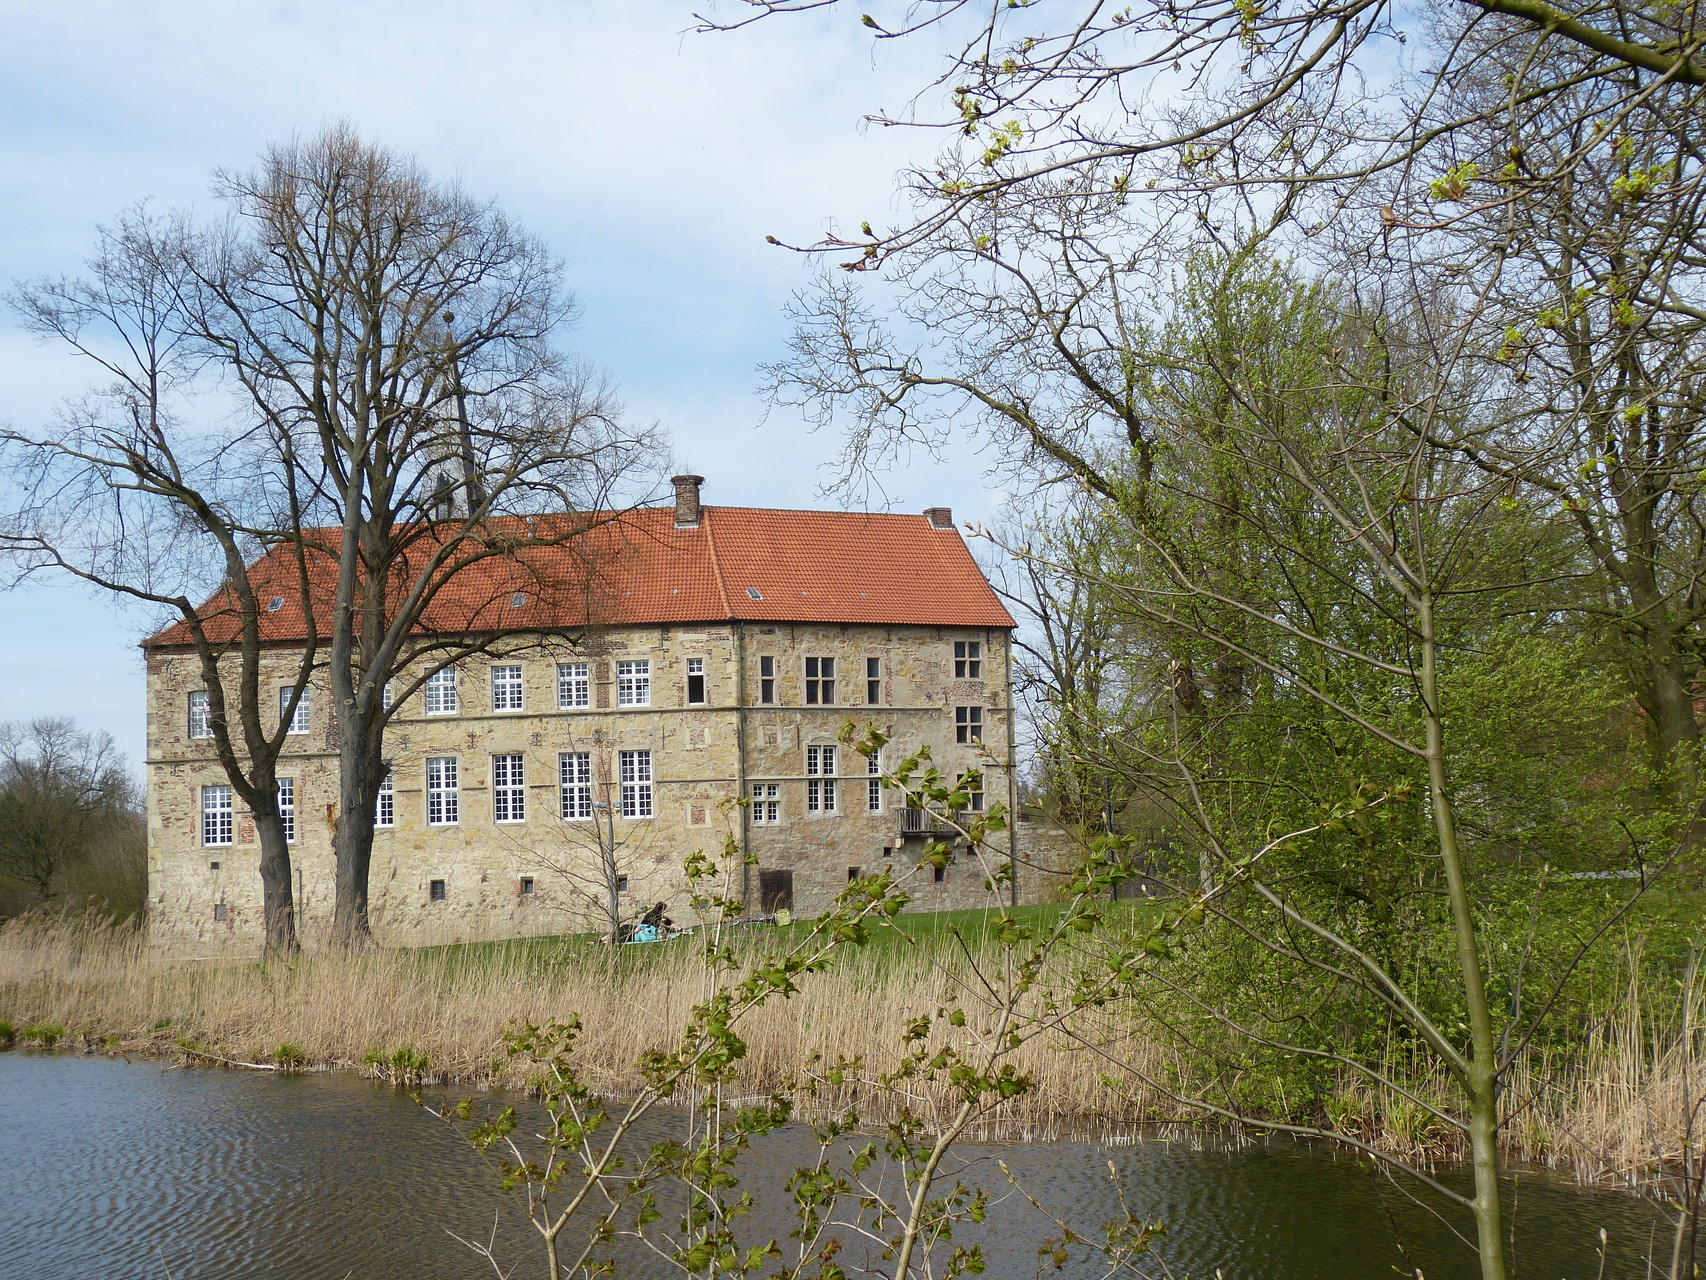 Burg Lüdinghausen